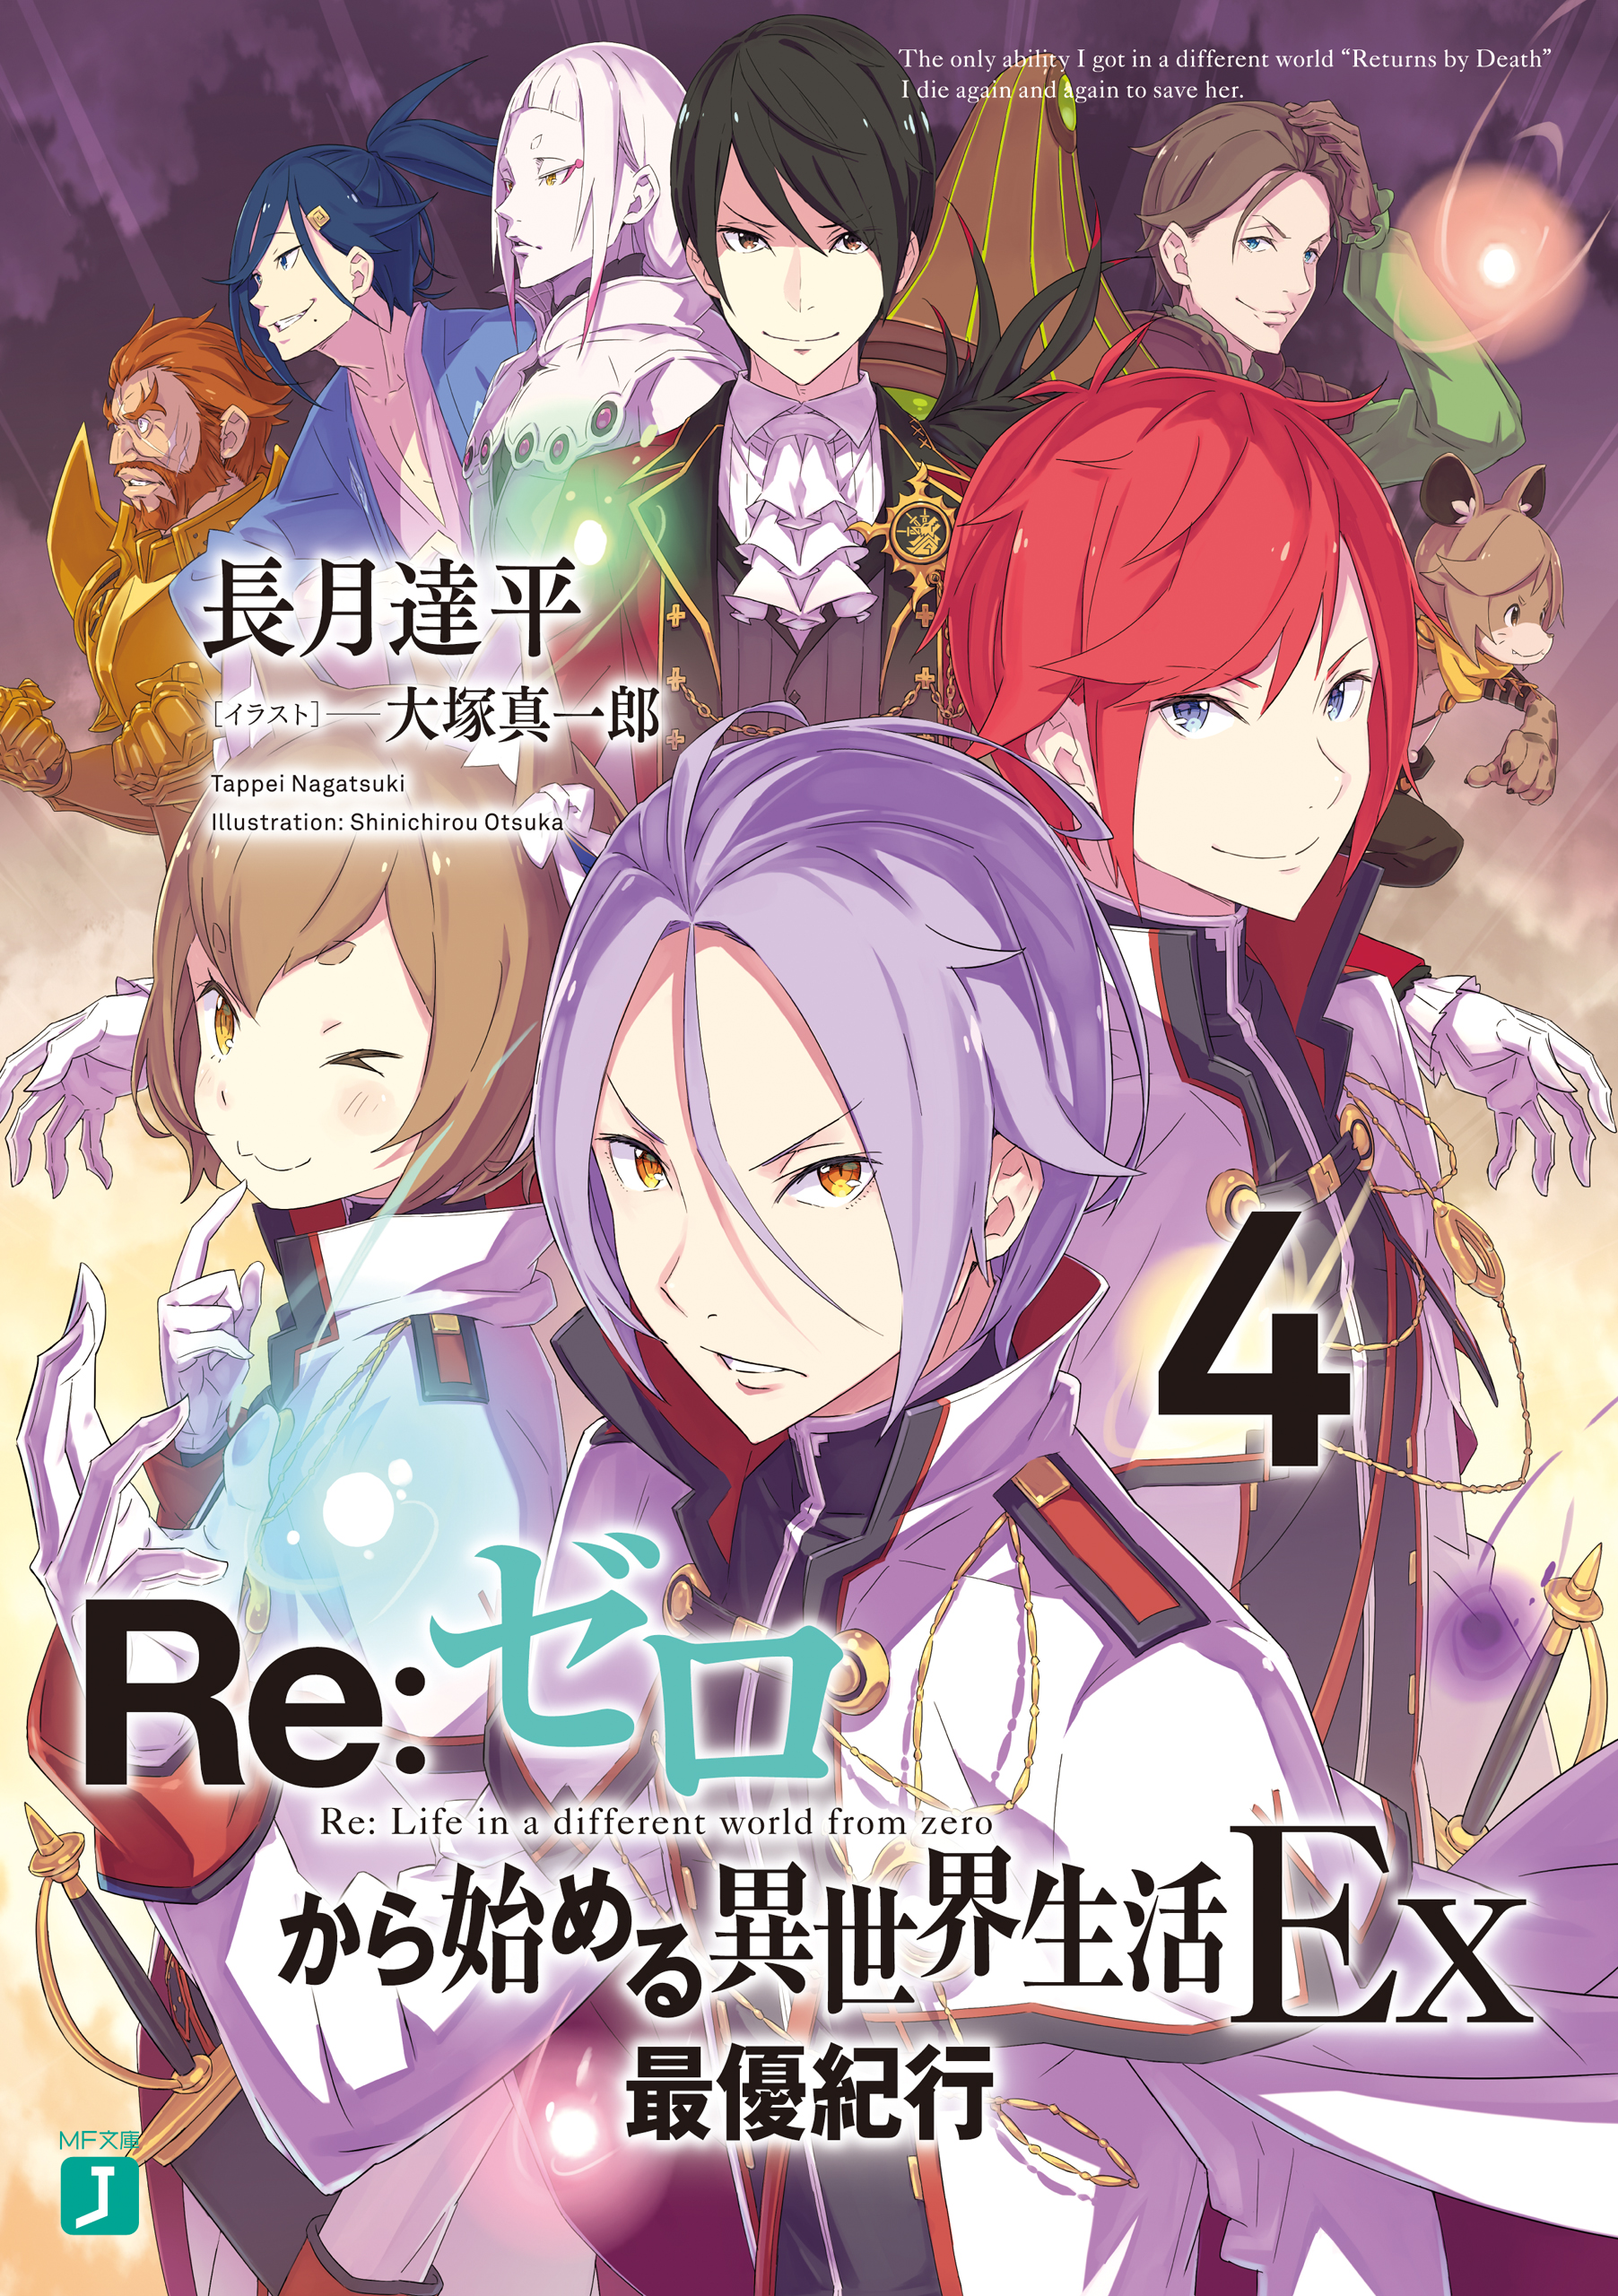 Re:Zero Ex Light Novel Volume 4 | Re:Zero Wiki | Fandom